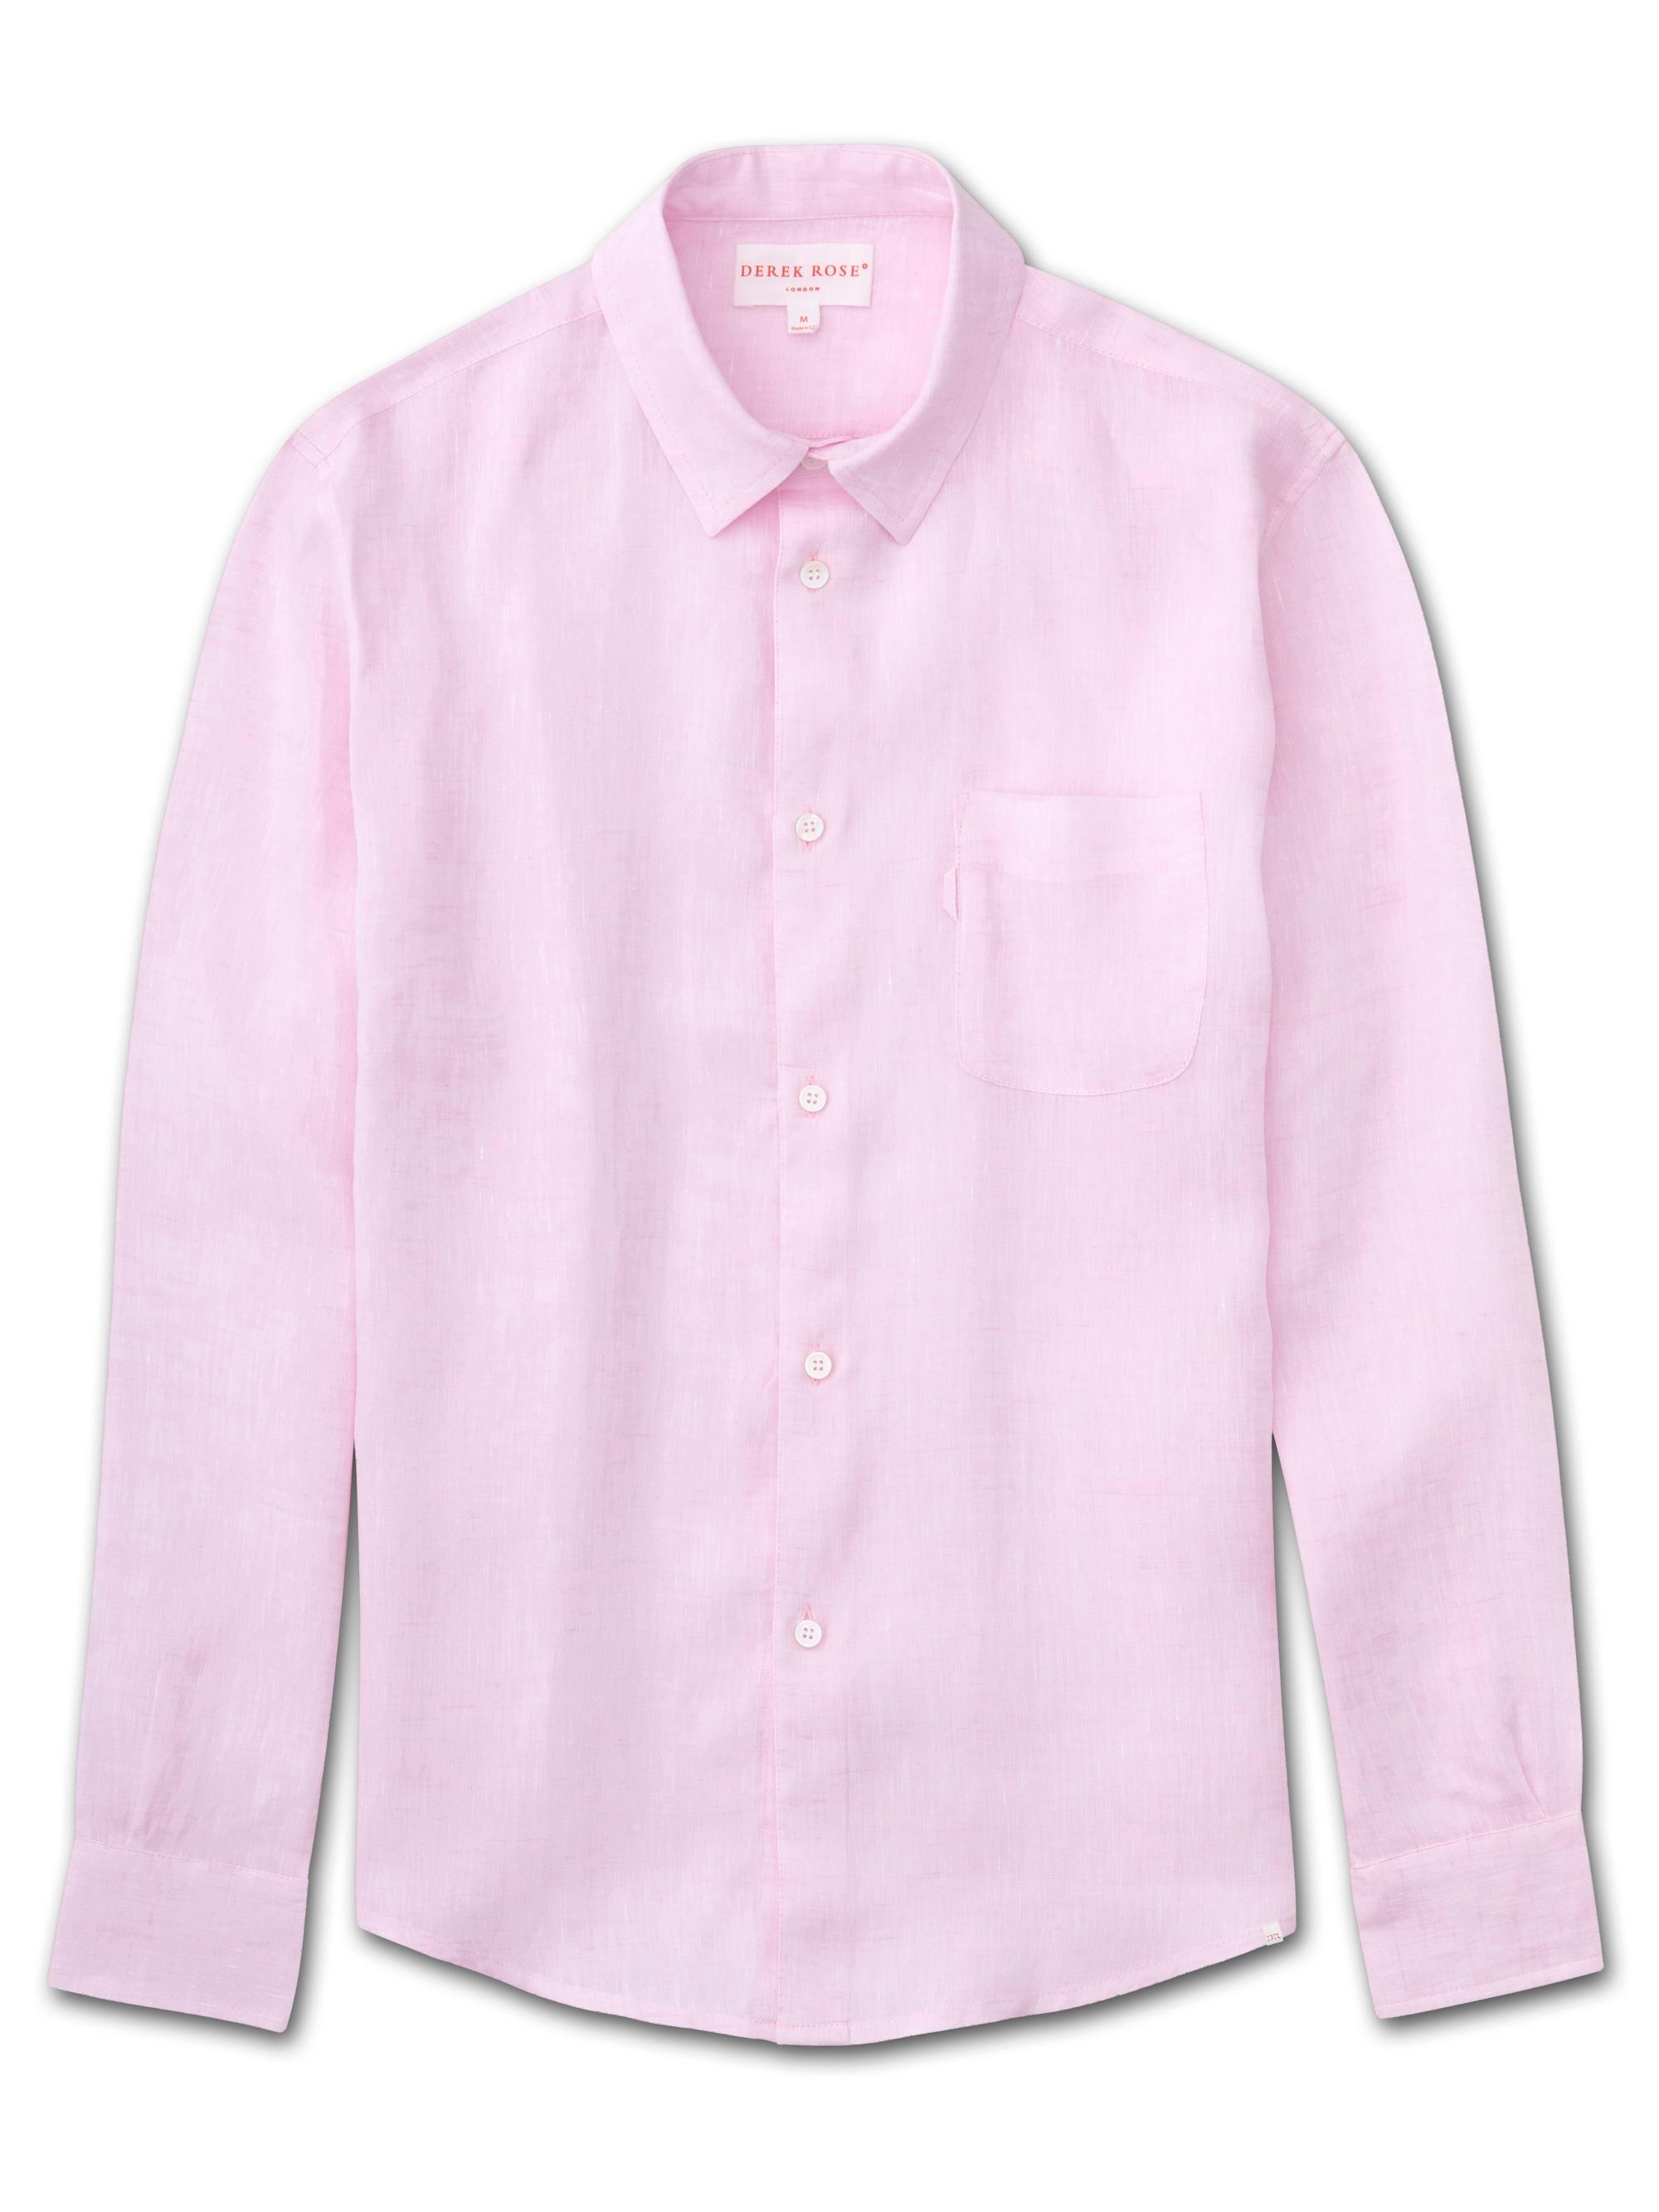 Derek Rose Linen Shirt Monaco Pure Linen Pink for Men - Lyst